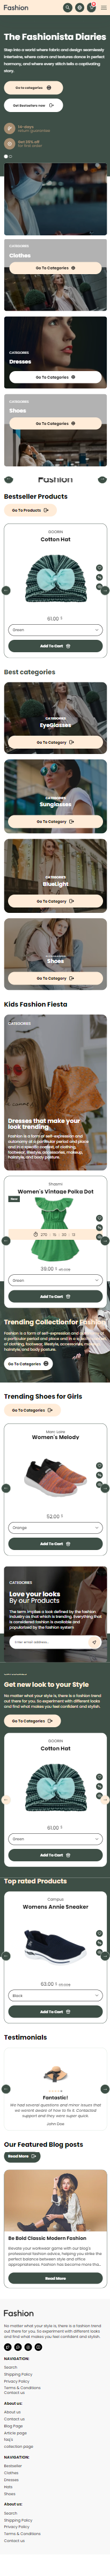 Fashion WordPress Theme - WorkDo